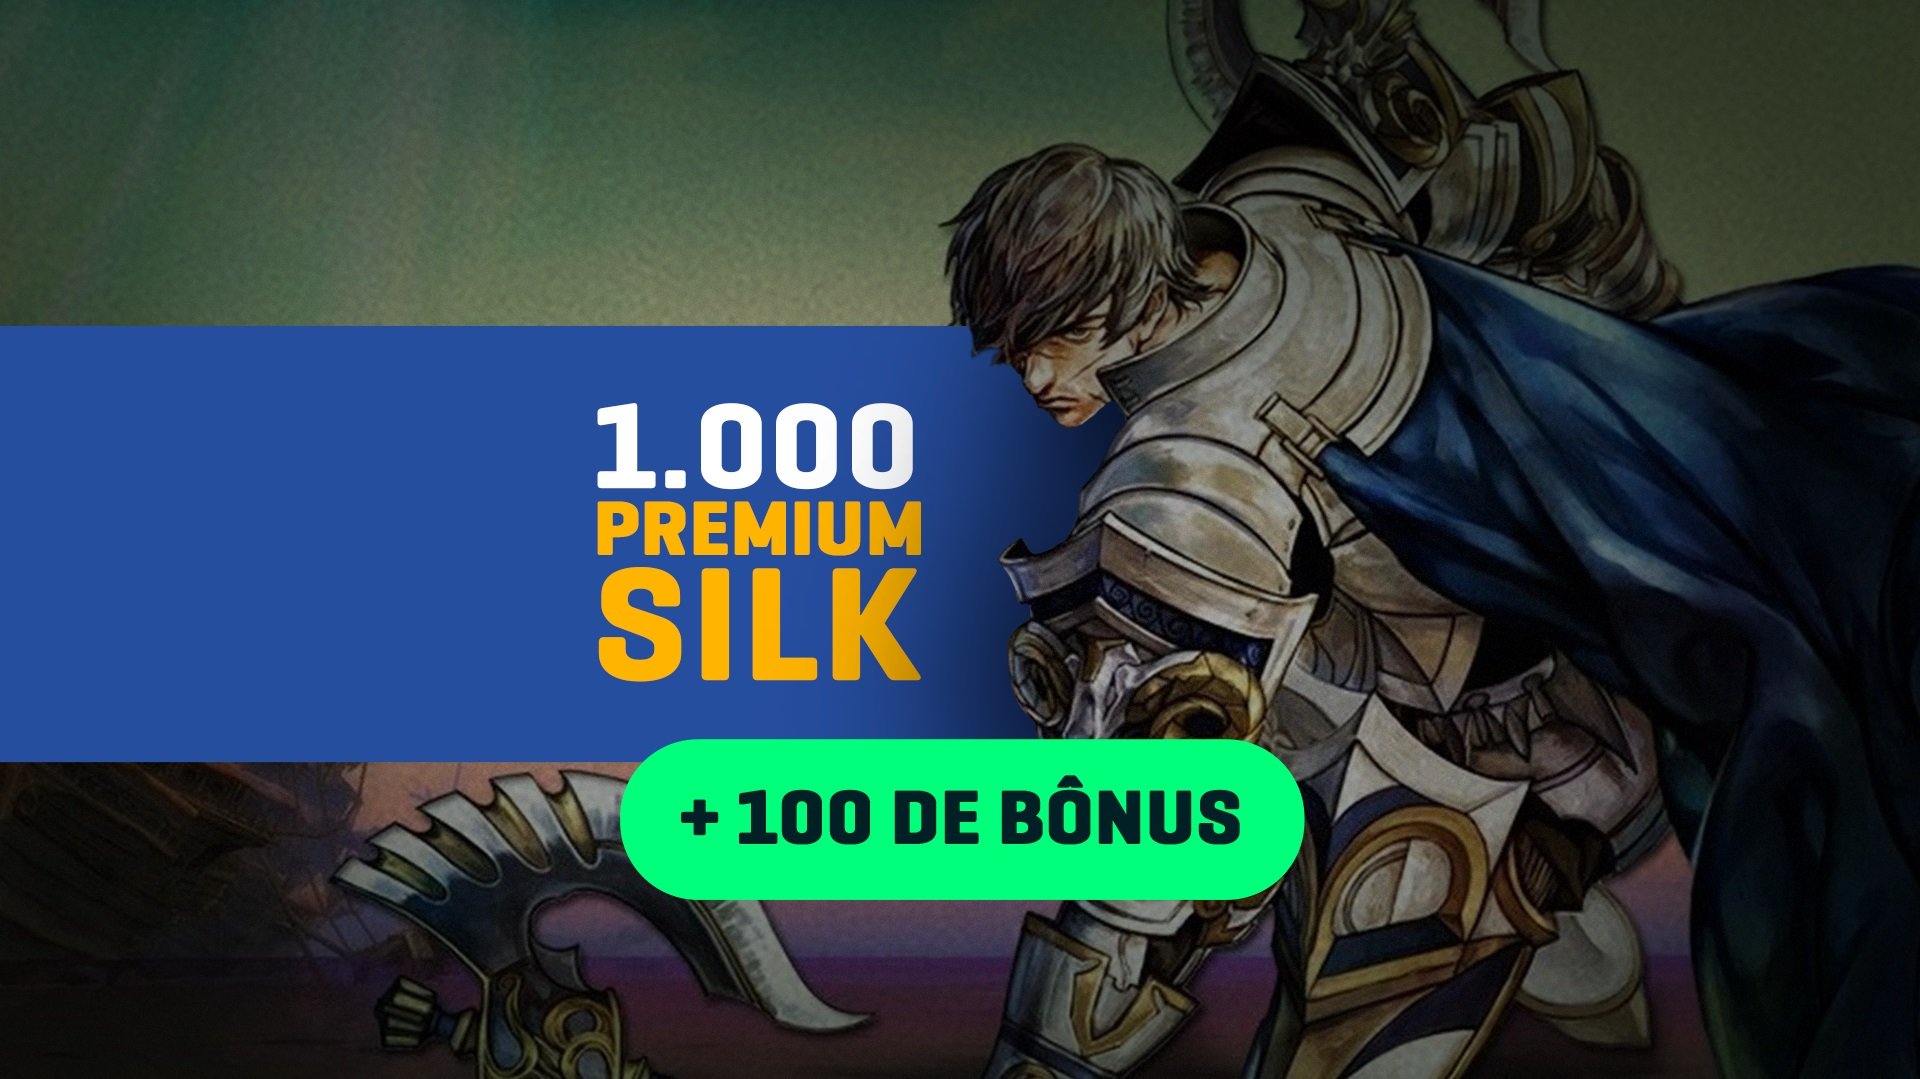 Silkroad – Pacote de 1.000 PREMIUM SILK + Bônus de 100 PREMIUM SILK